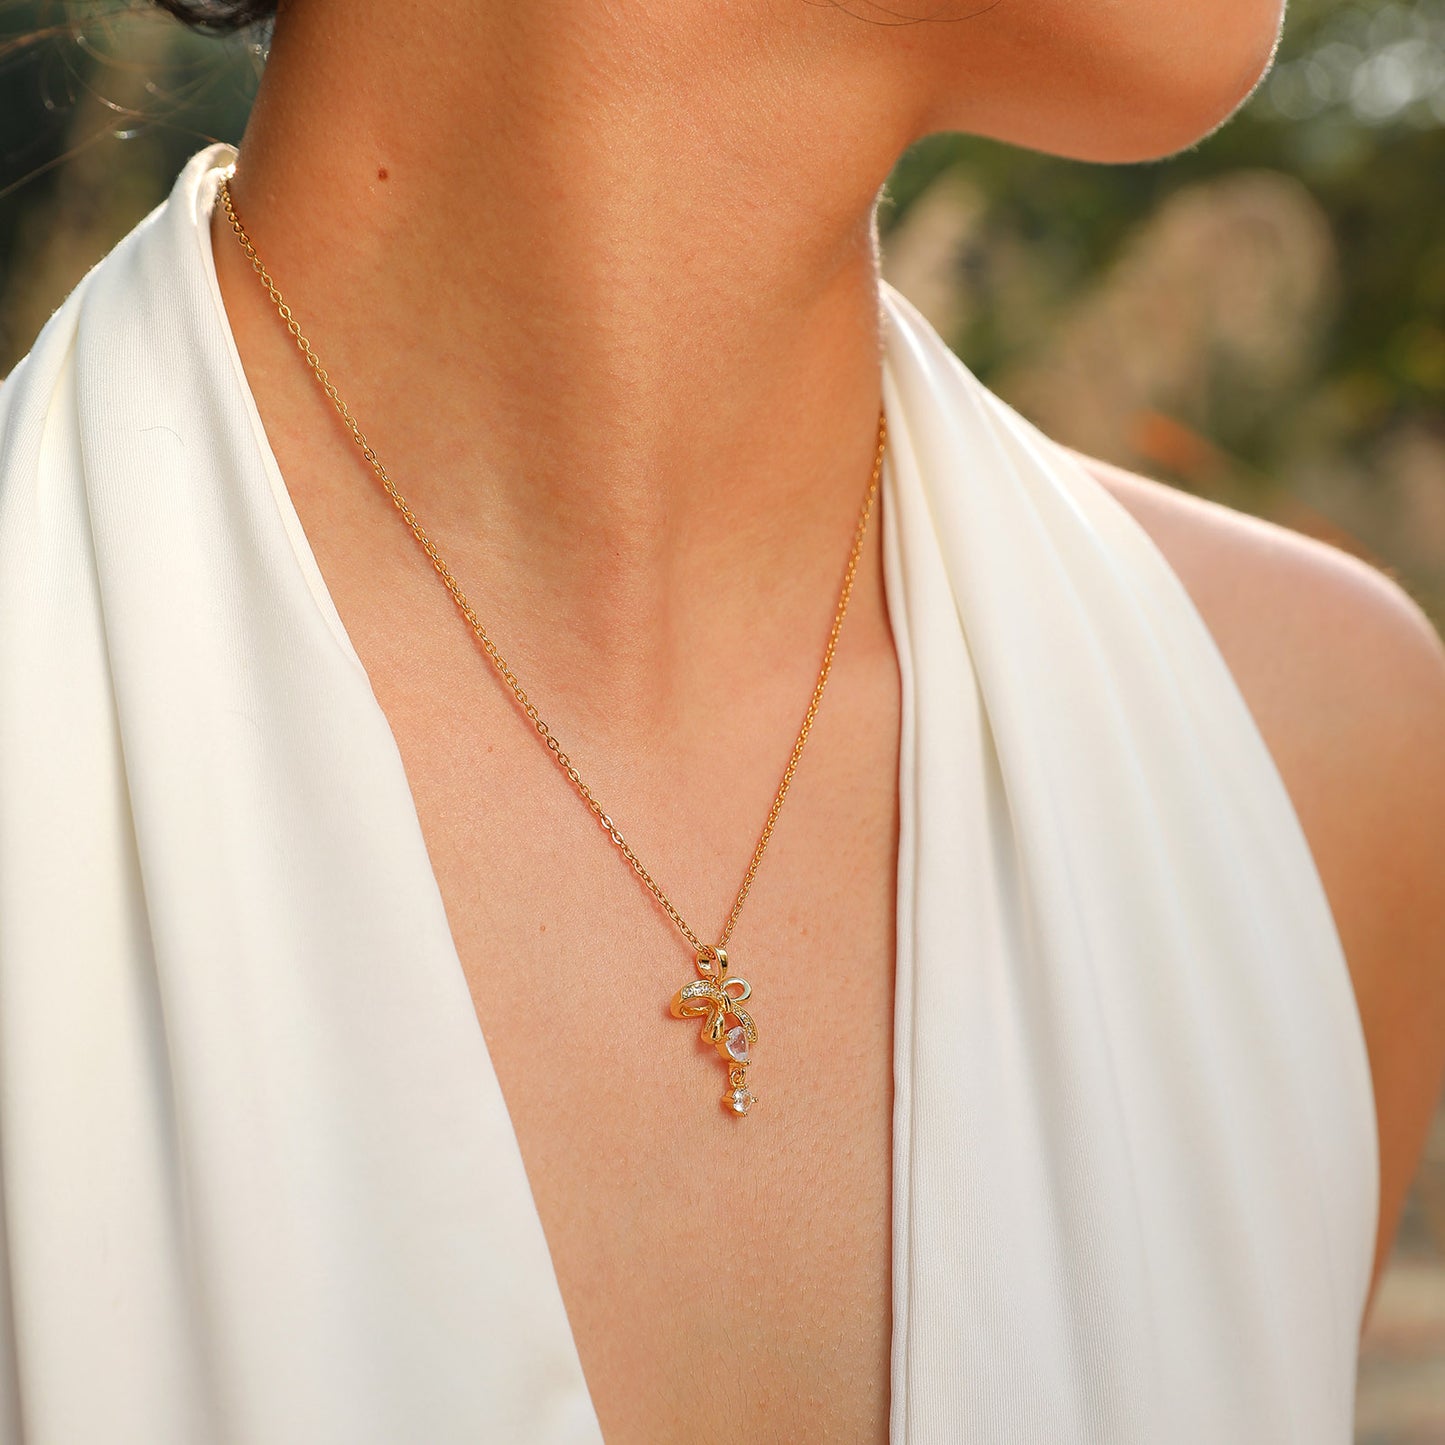 Sweet Heart Shape Bow Knot Copper Pendant Necklace